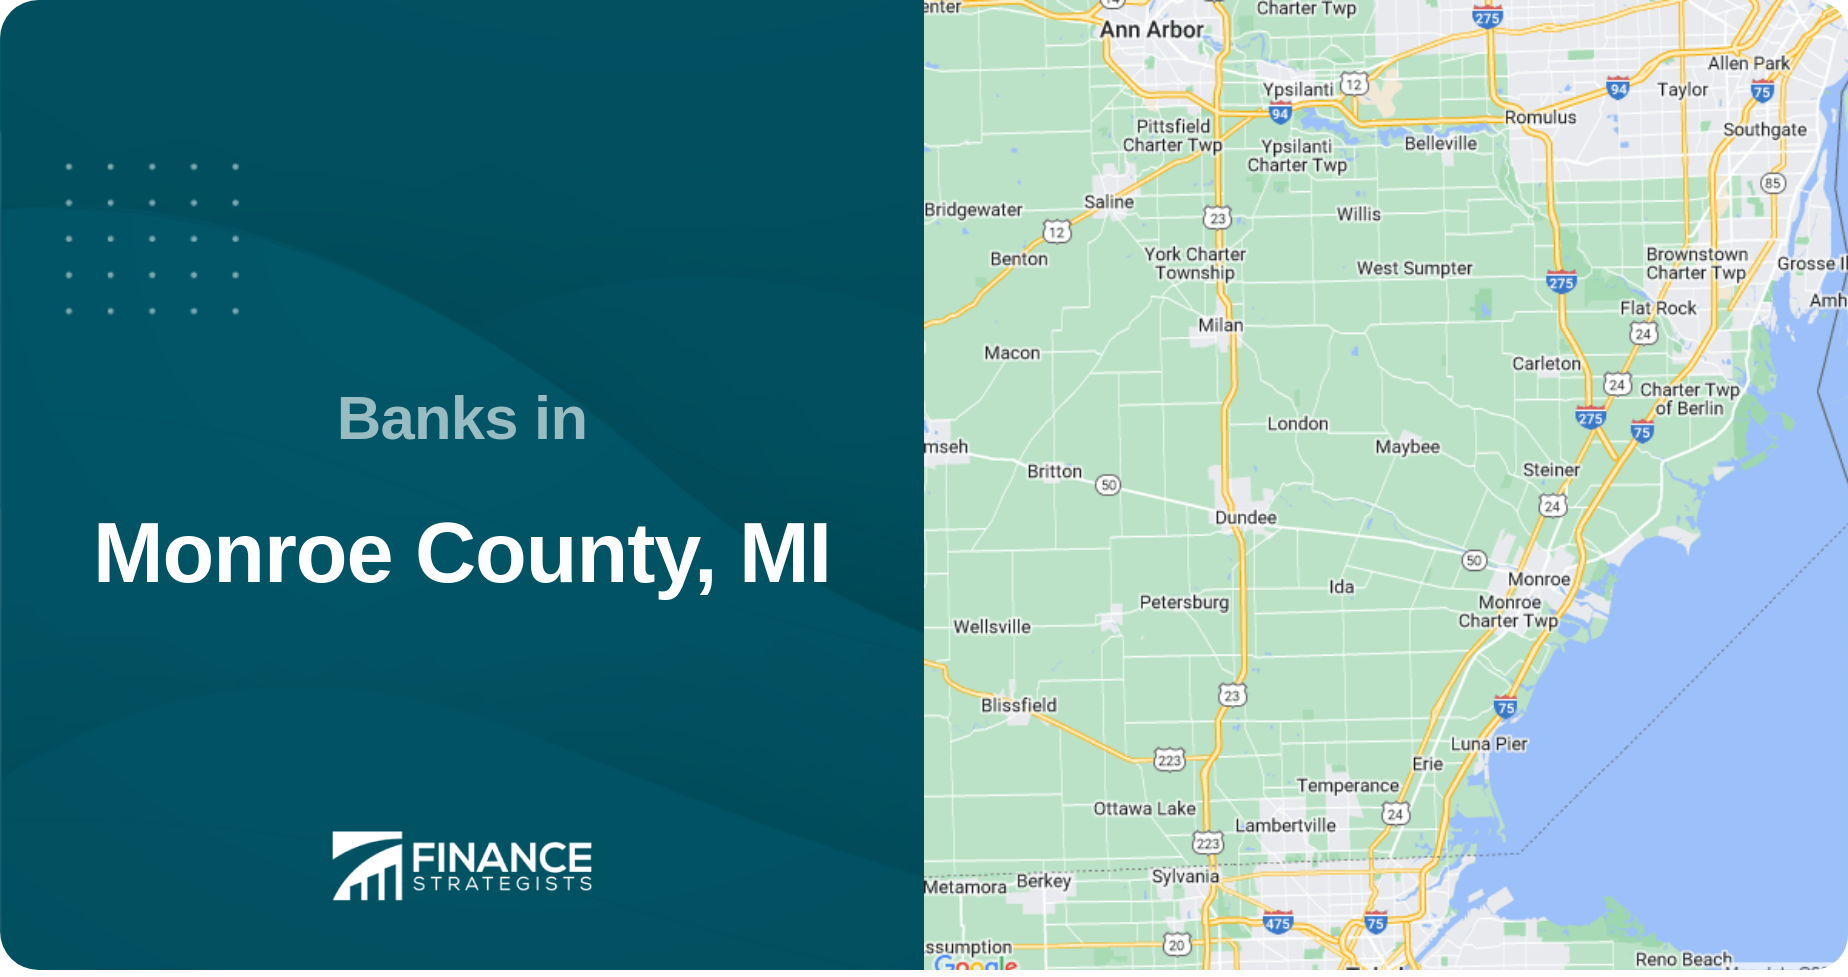 Banks in Monroe County, MI